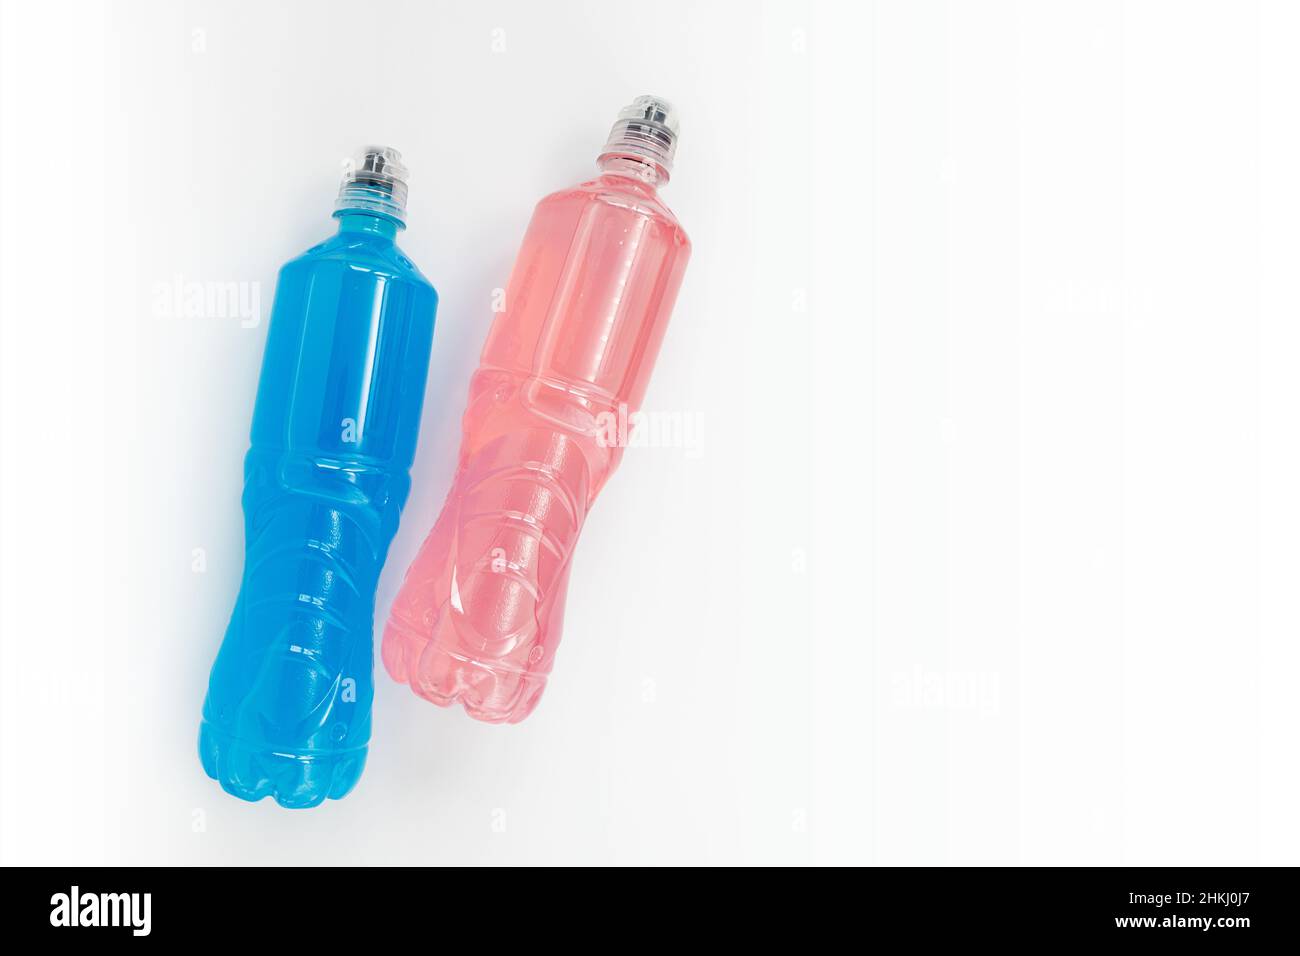 https://c8.alamy.com/comp/2HKJ0J7/isotonic-energy-drink-bottle-with-blue-and-pink-transparent-liquid-sport-beverage-on-white-background-2HKJ0J7.jpg